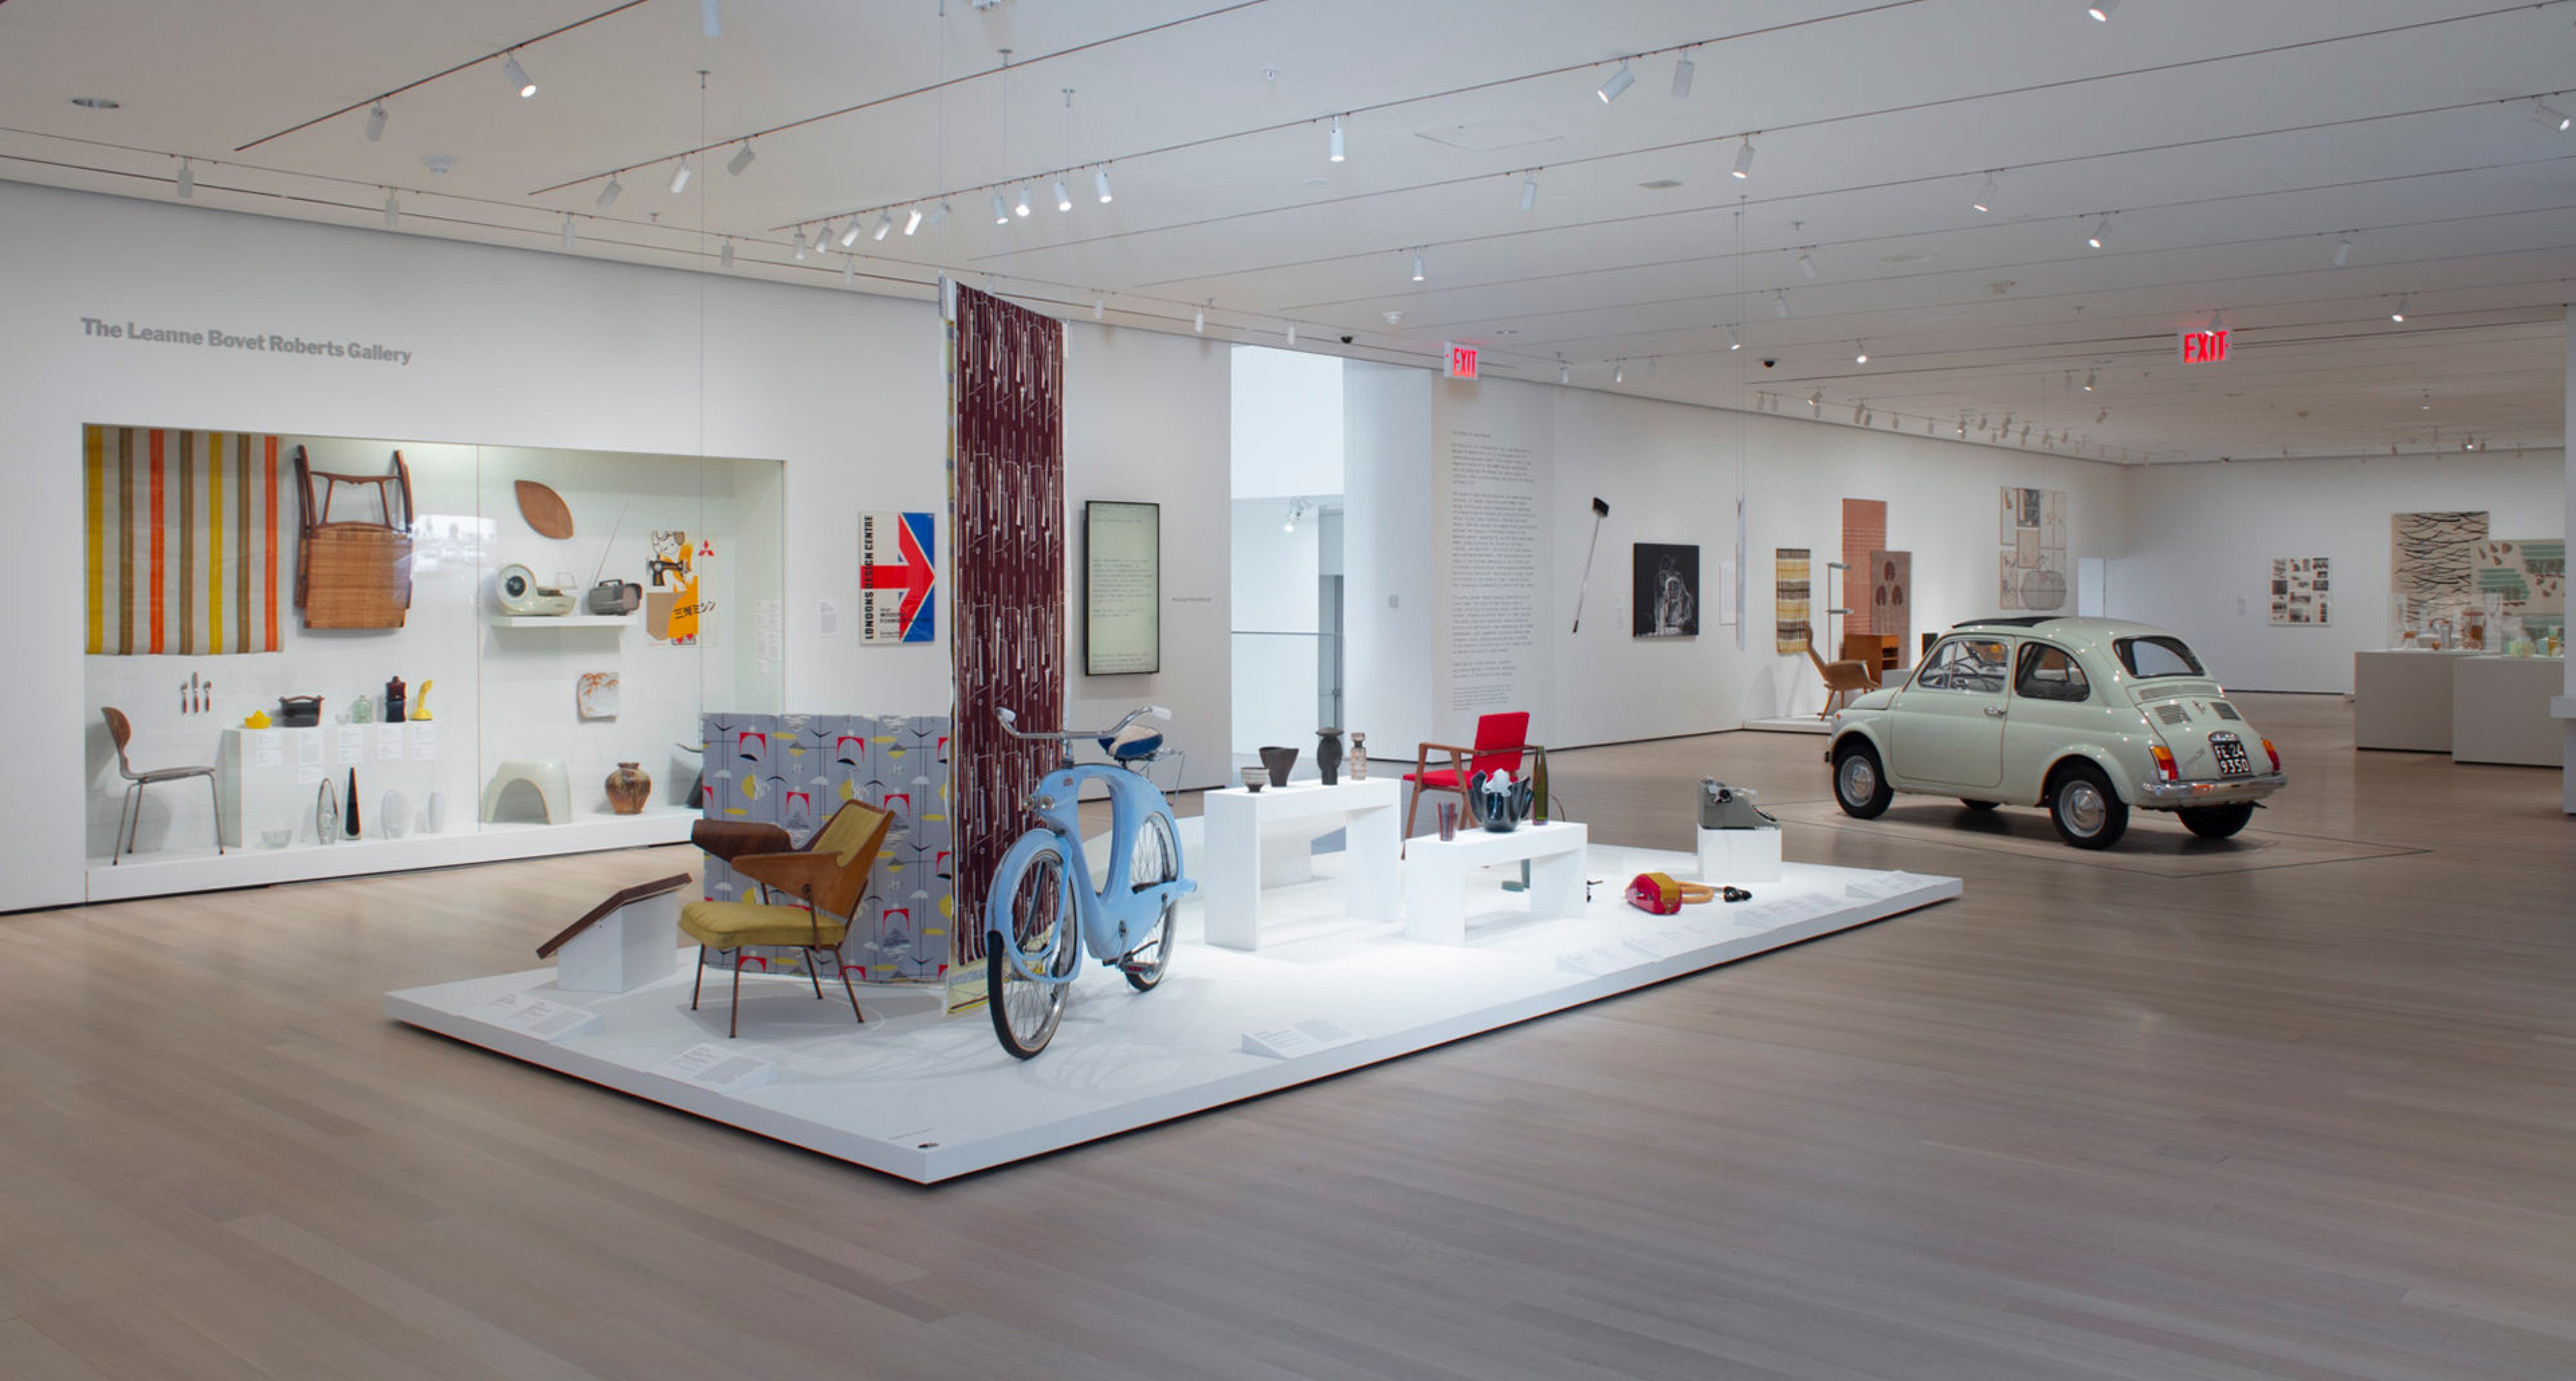 Installation view, The Value of Good Design at The Museum of Modern Art, New York (February 10–June 15, 2019). Digital image © 2019 The Museum of Modern Art, New York. Photo: John Wronn